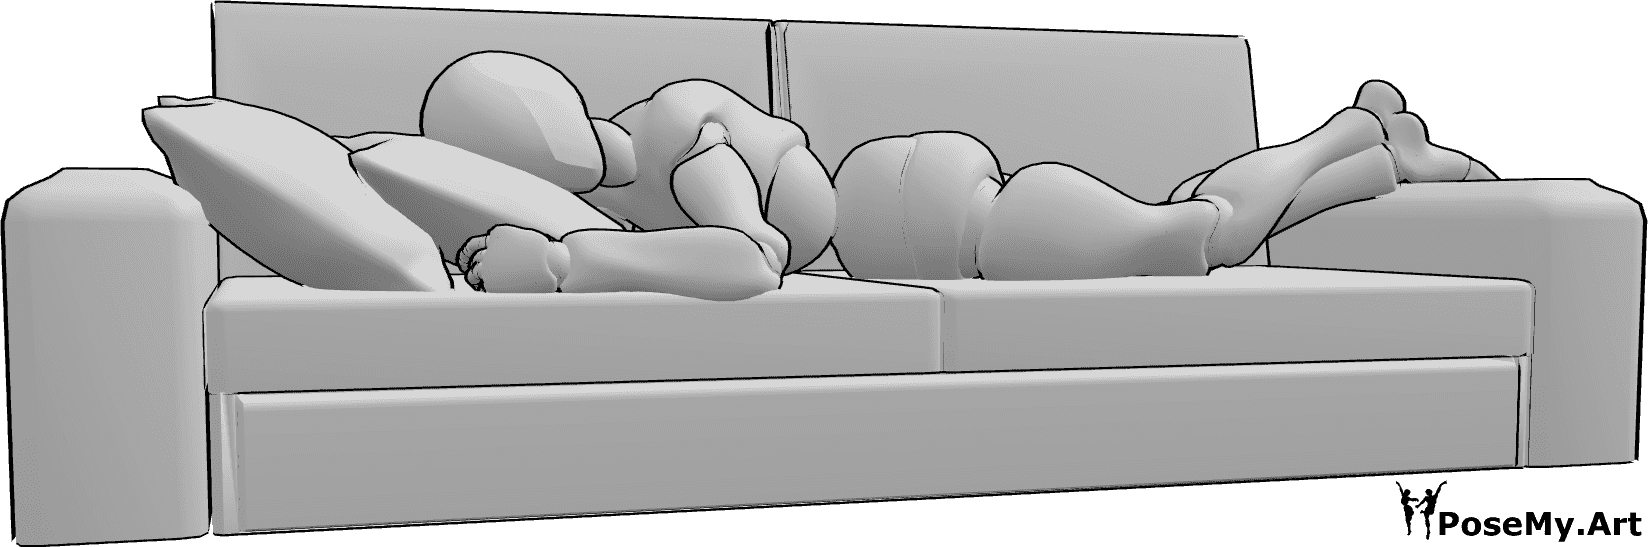 Pose Reference- Sleeping stomach sofa pose - Female is lying on her stomach, sleeping on sofa